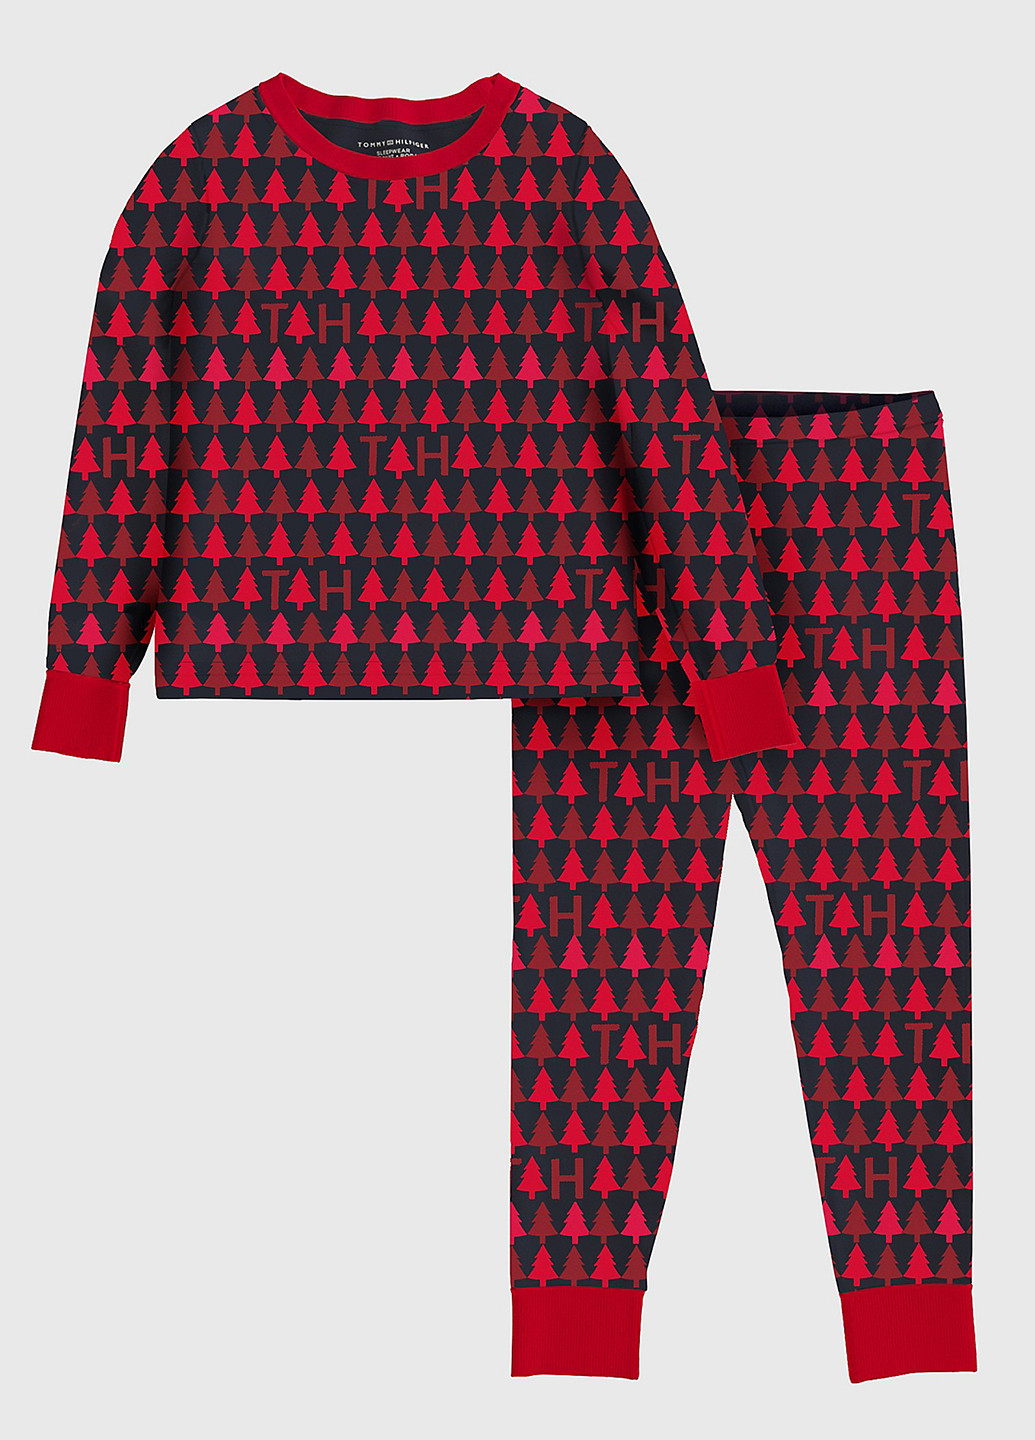 Пижама (свитшот, брюки) Tommy Hilfiger свитшот + брюки геометрическая комбинированная домашняя хлопок, трикотаж